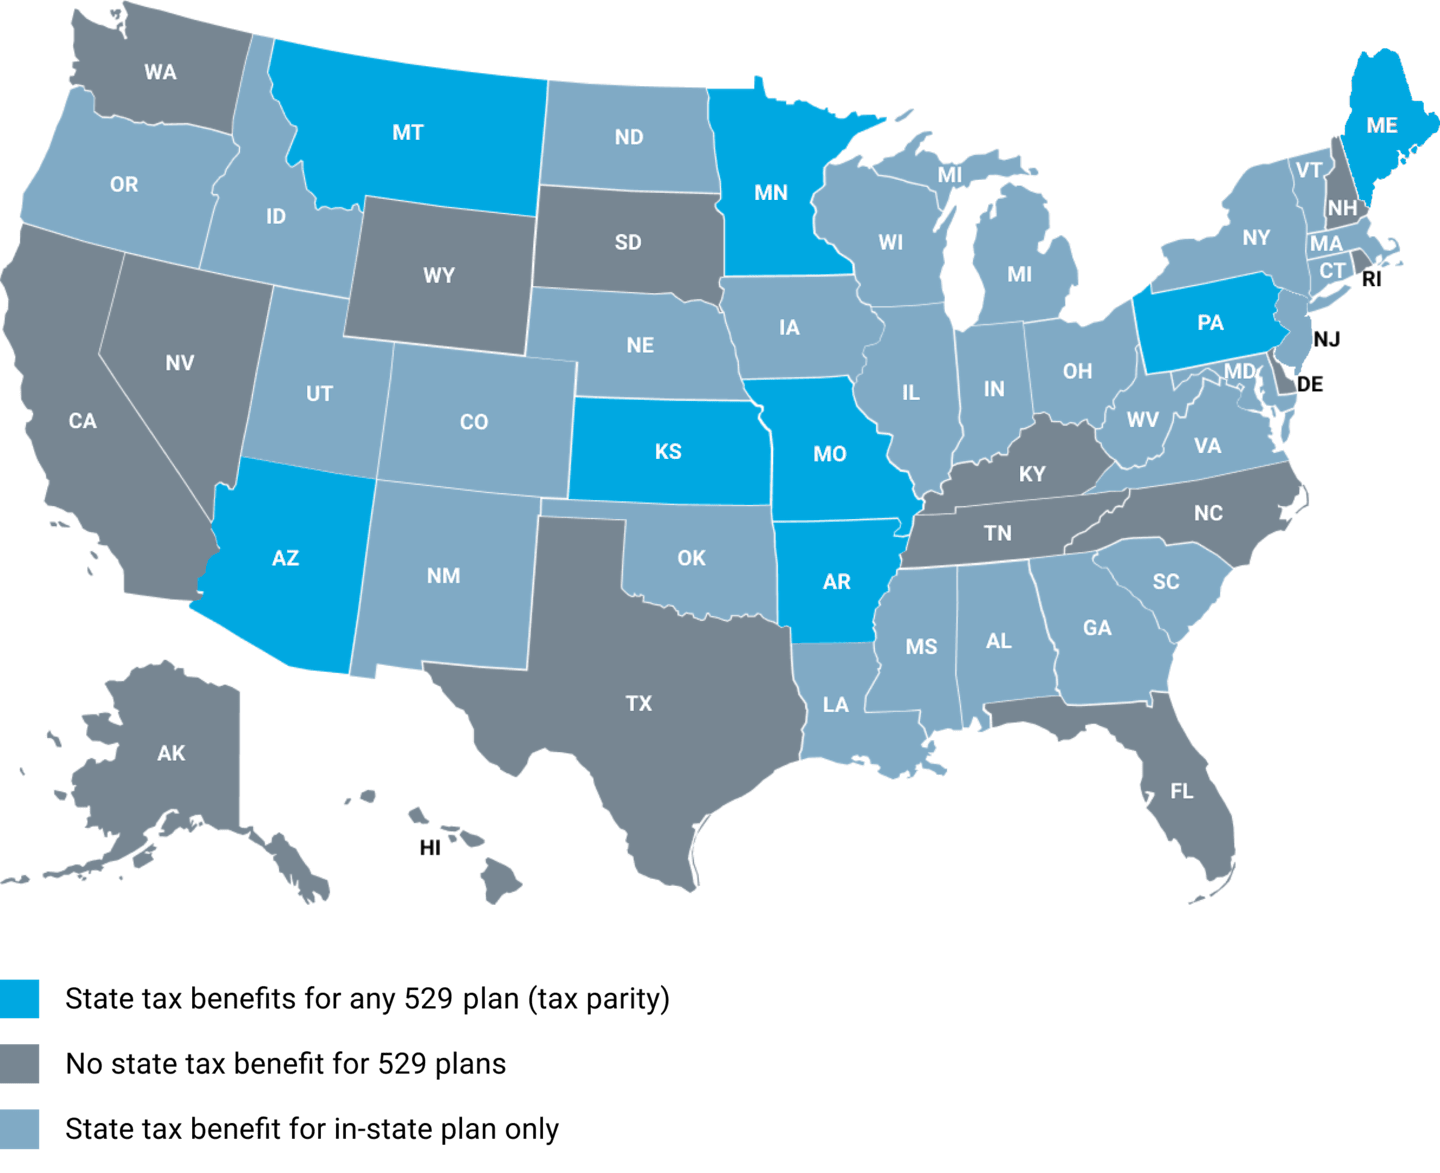 Tax Savings Map by U.S. State.